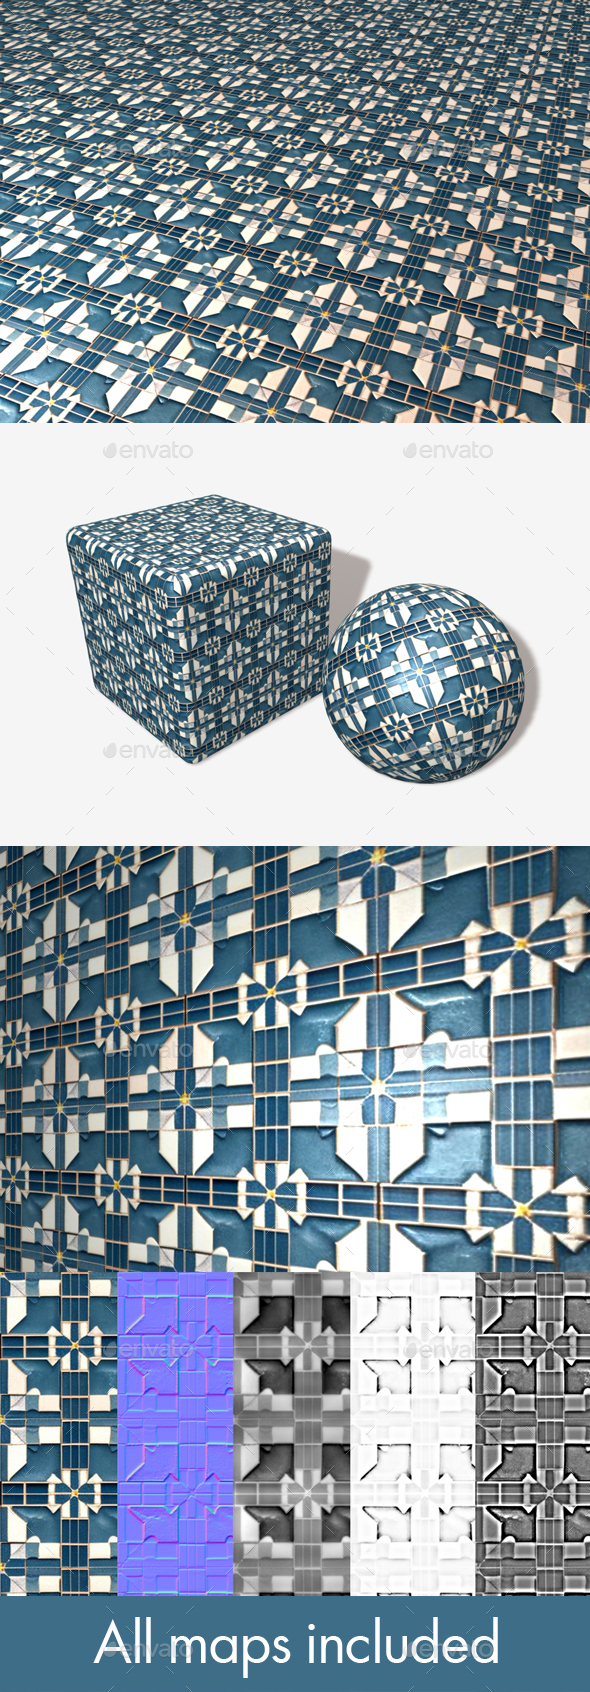 Decorative Art Deco Tiles Seamless Texture